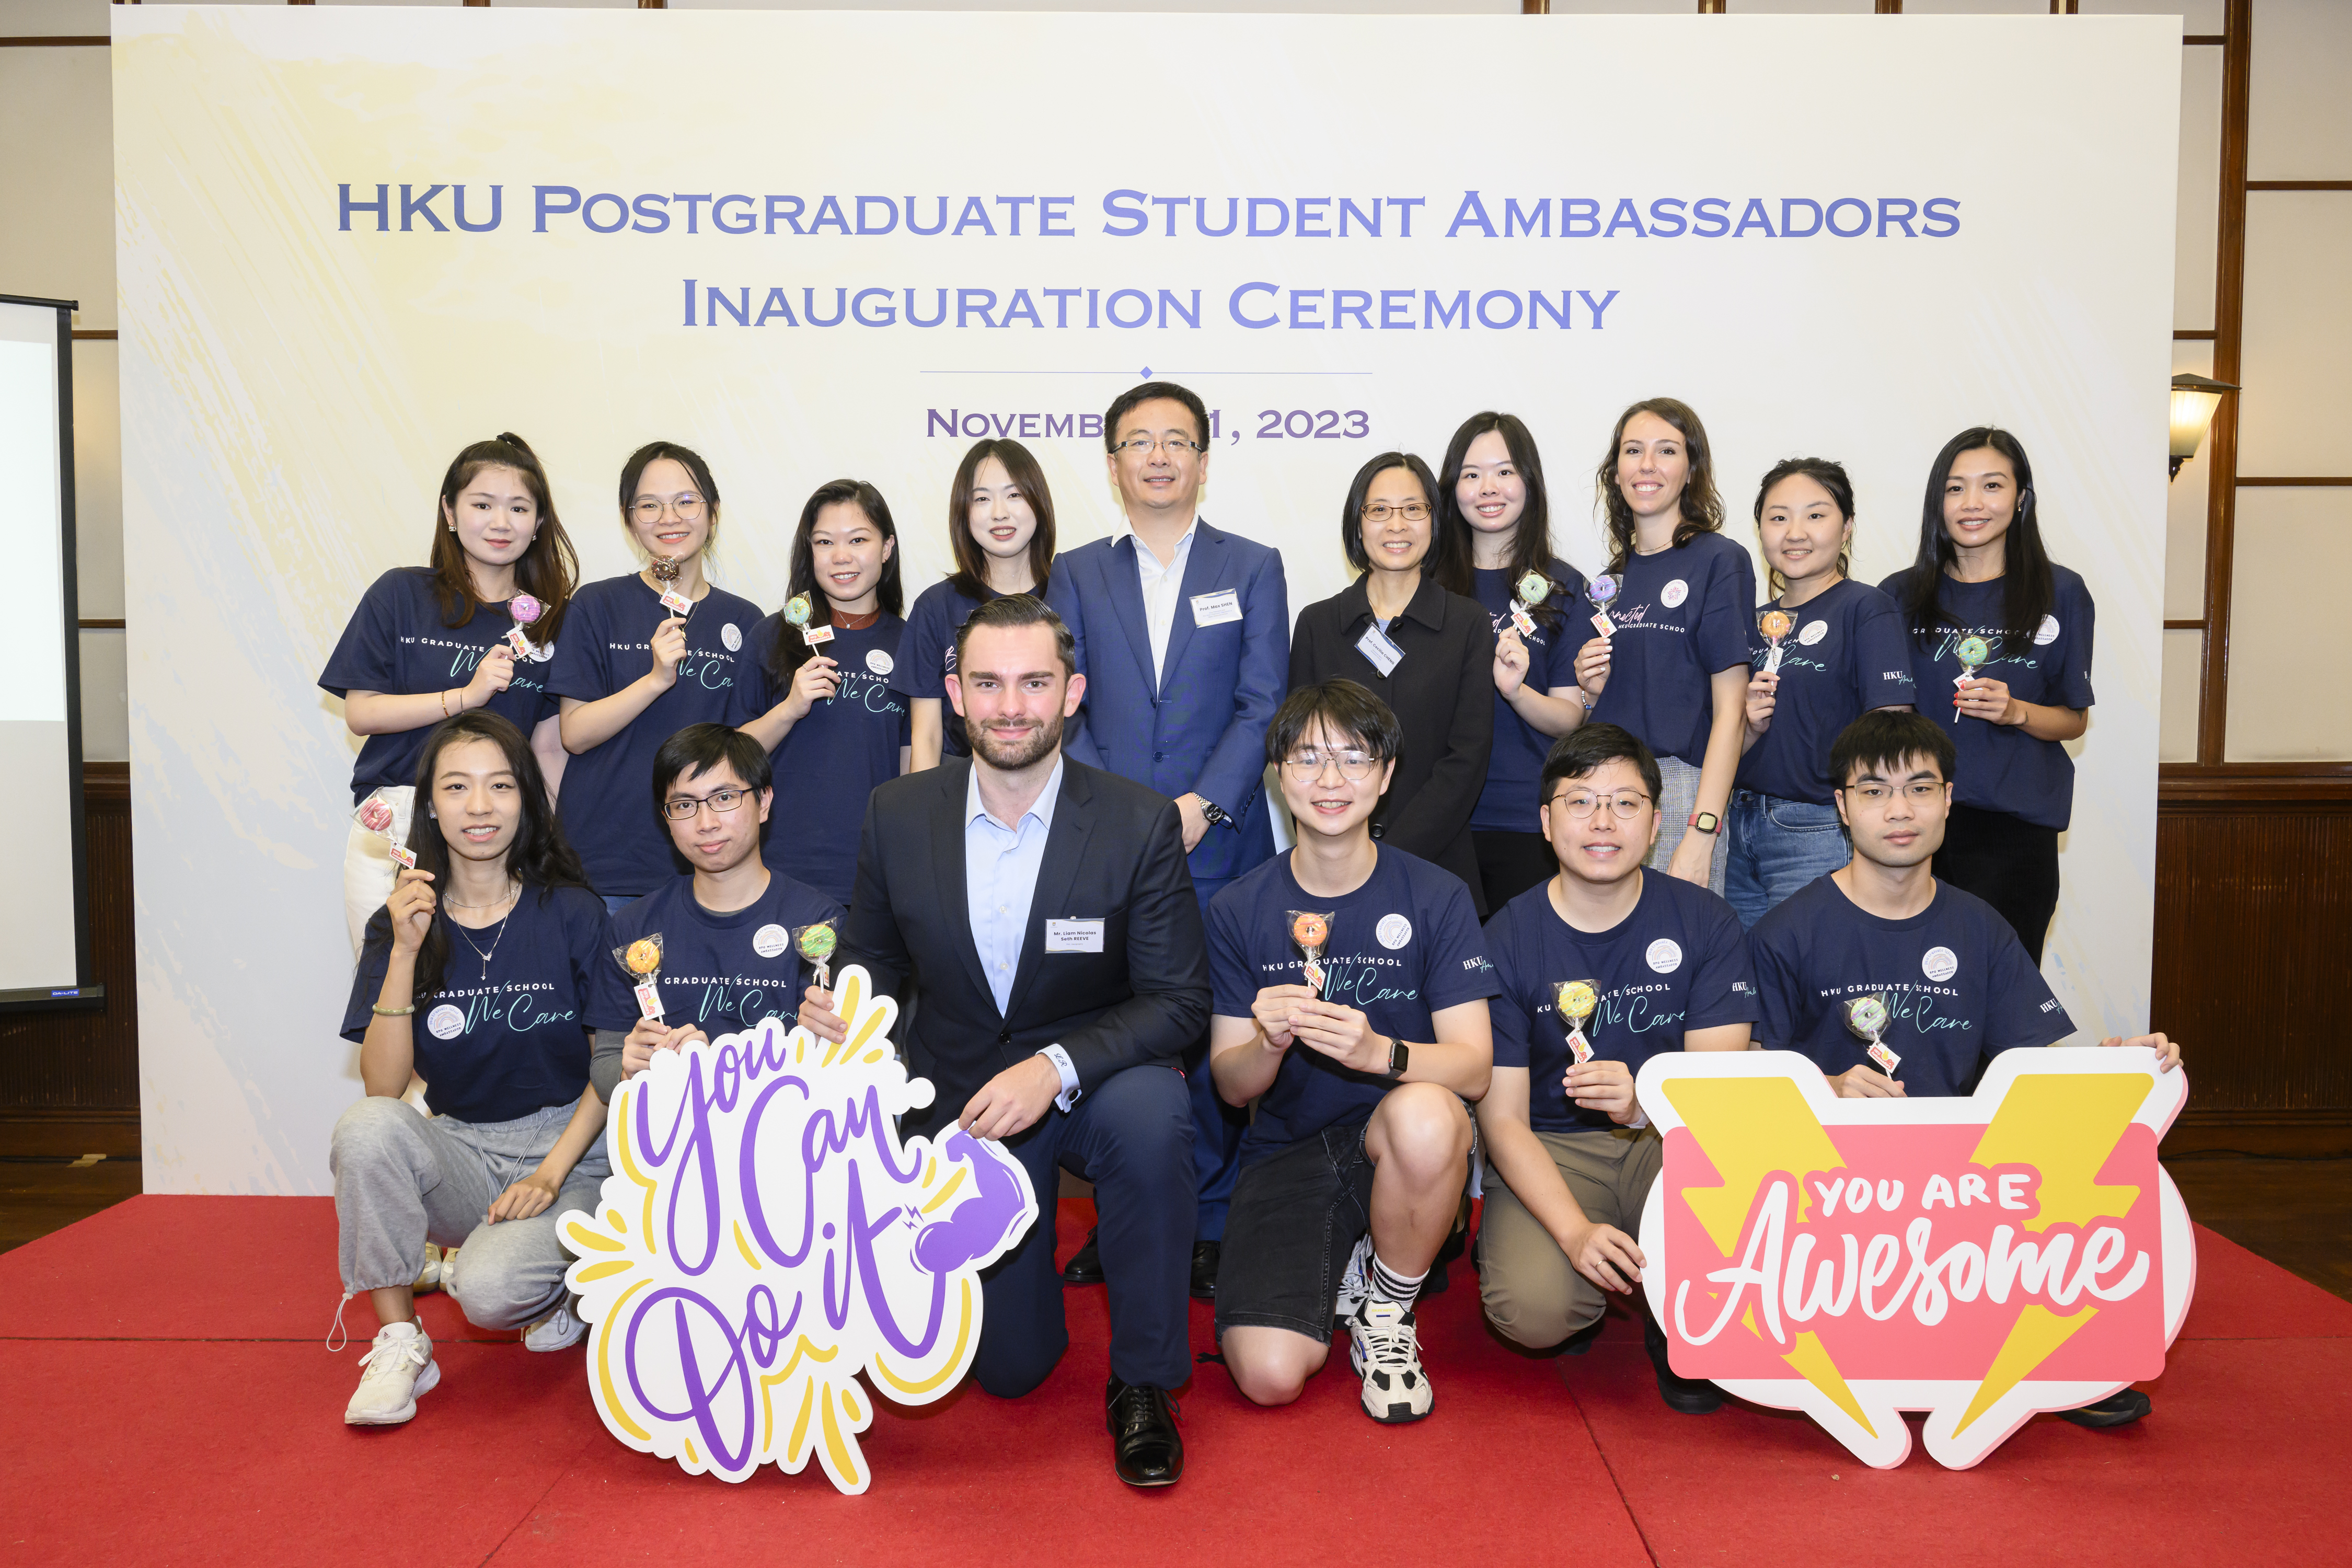 Appointing postgraduate student ambassadors